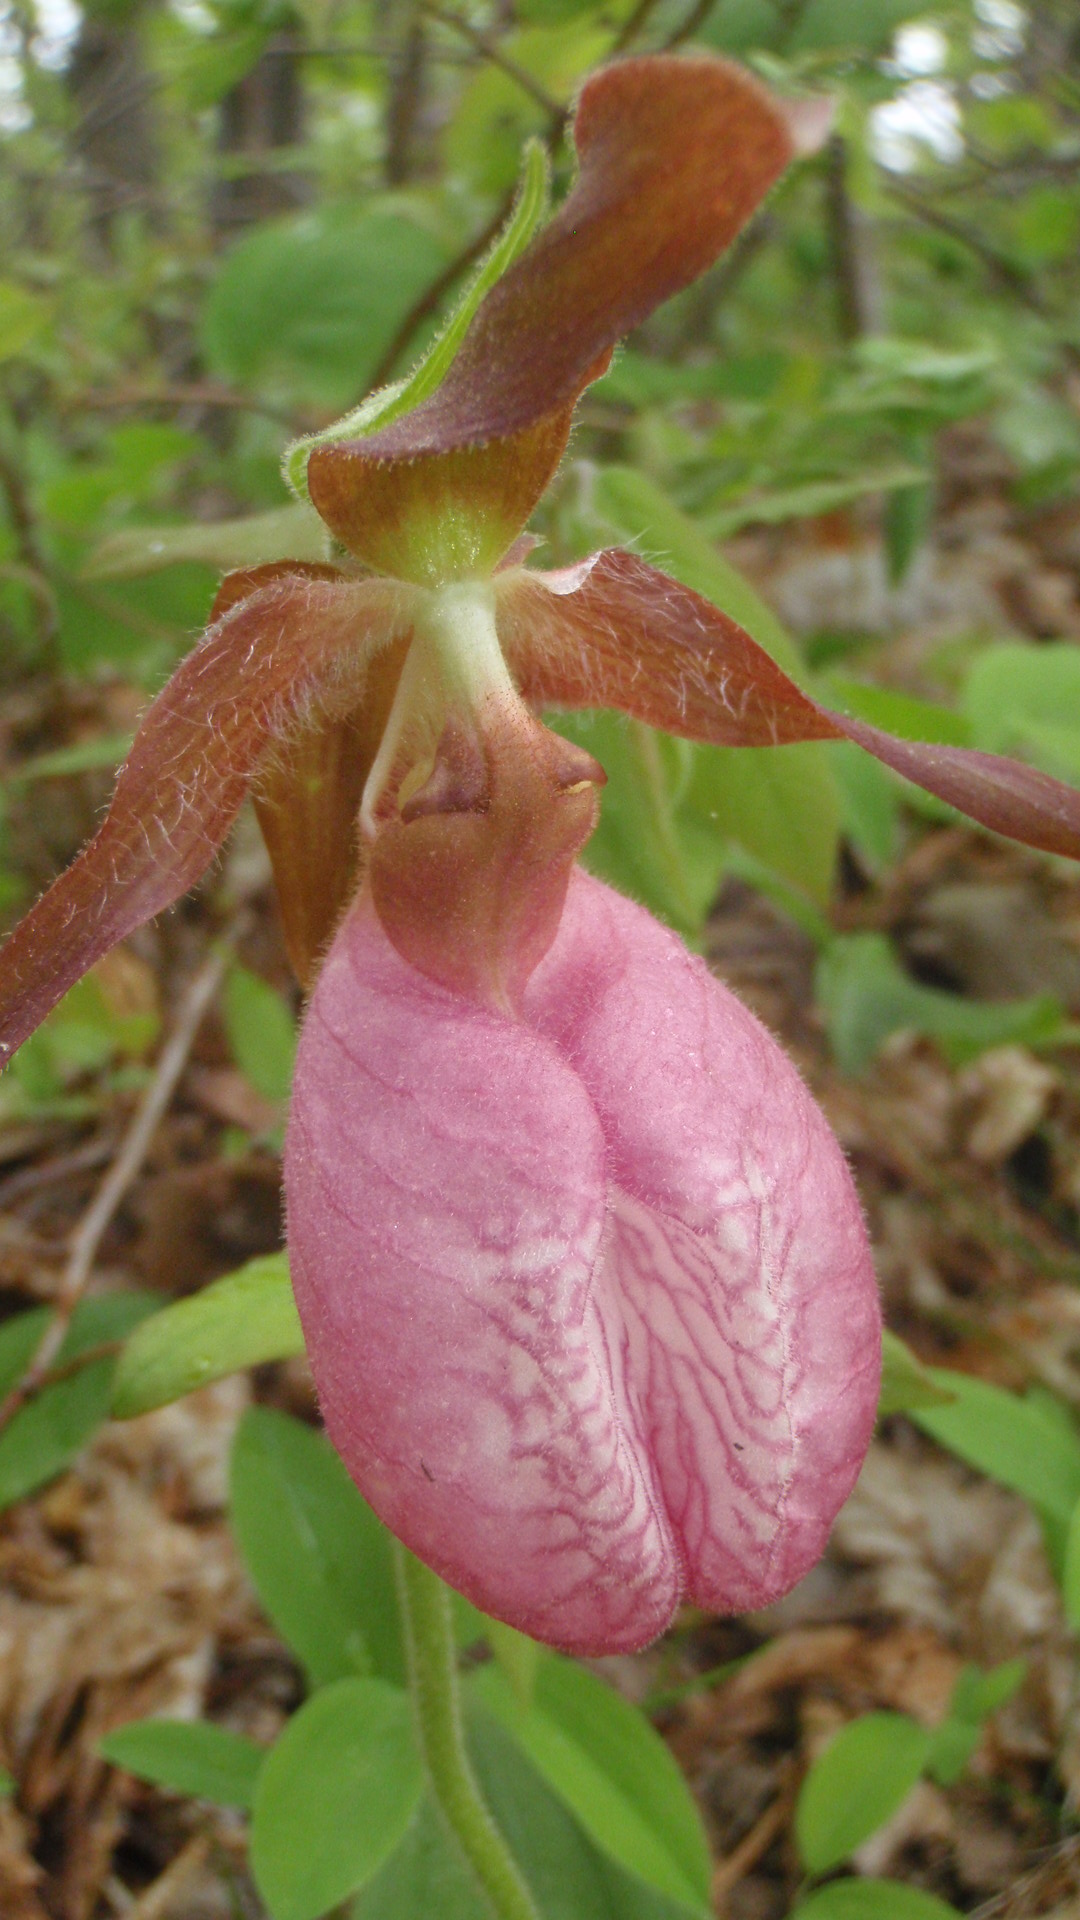 Moccasin flower (pink lady's slipper)